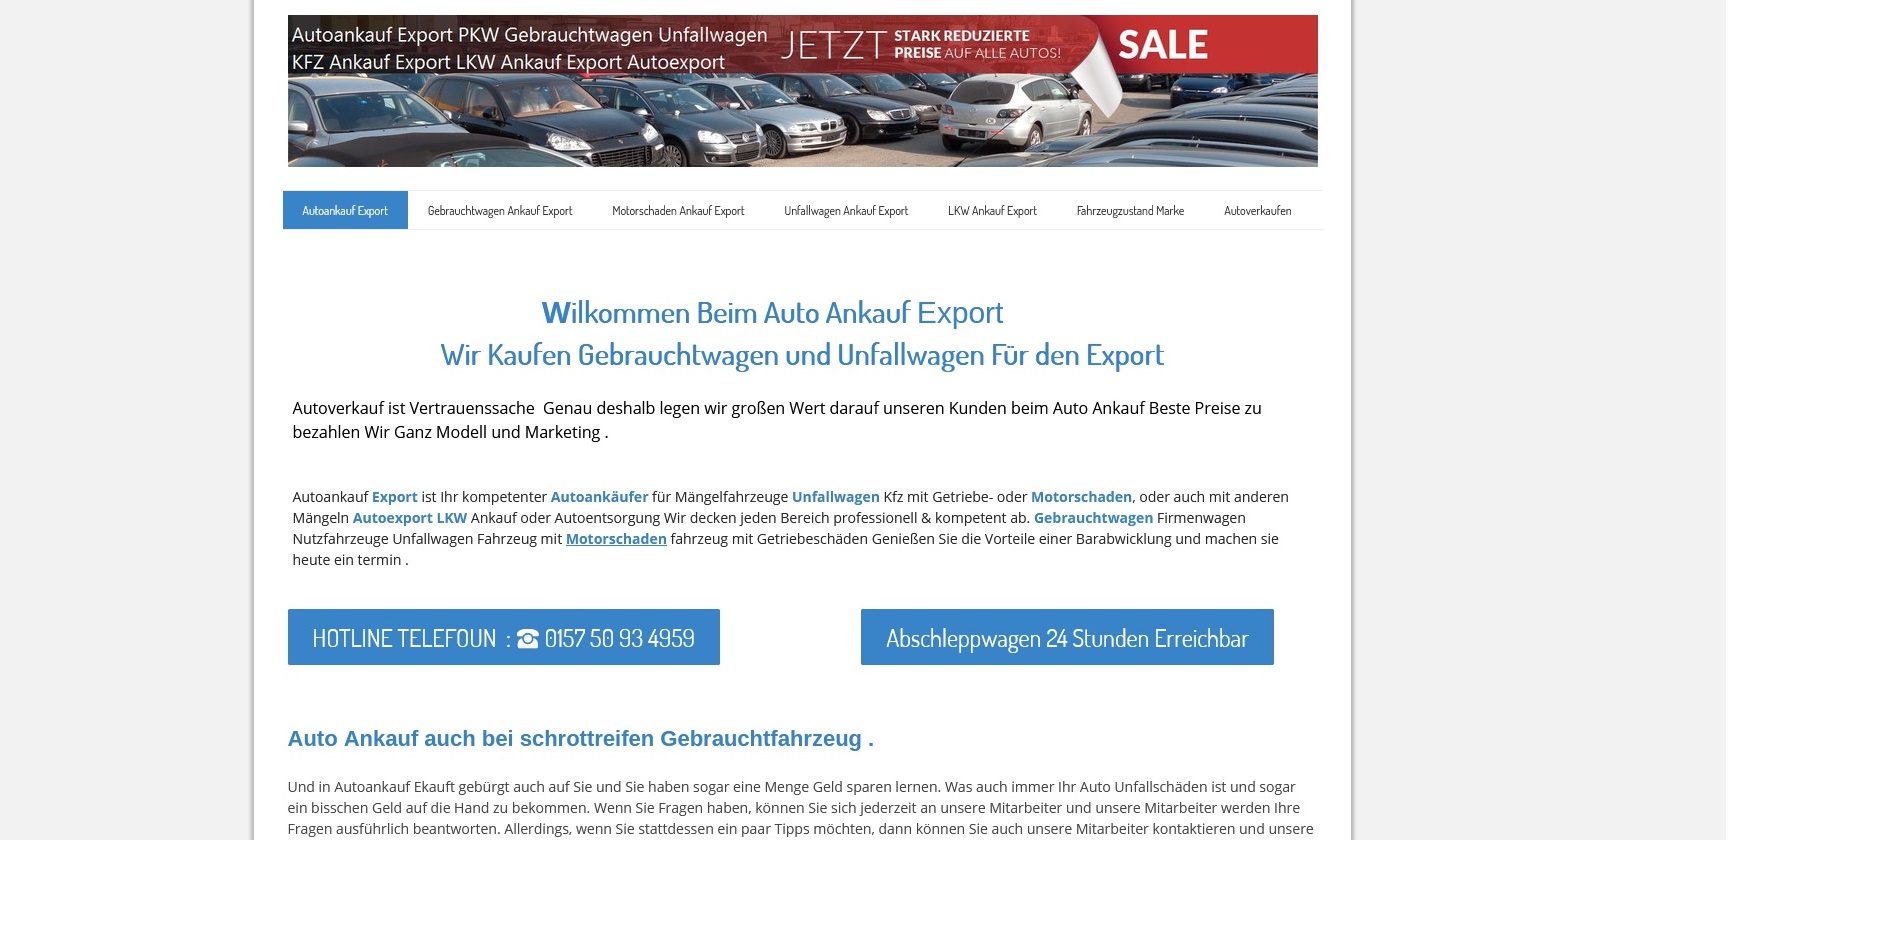 Kfz-Ankauf-export.de | Autoankauf Siegburg | Autoankauf Export Siegburg